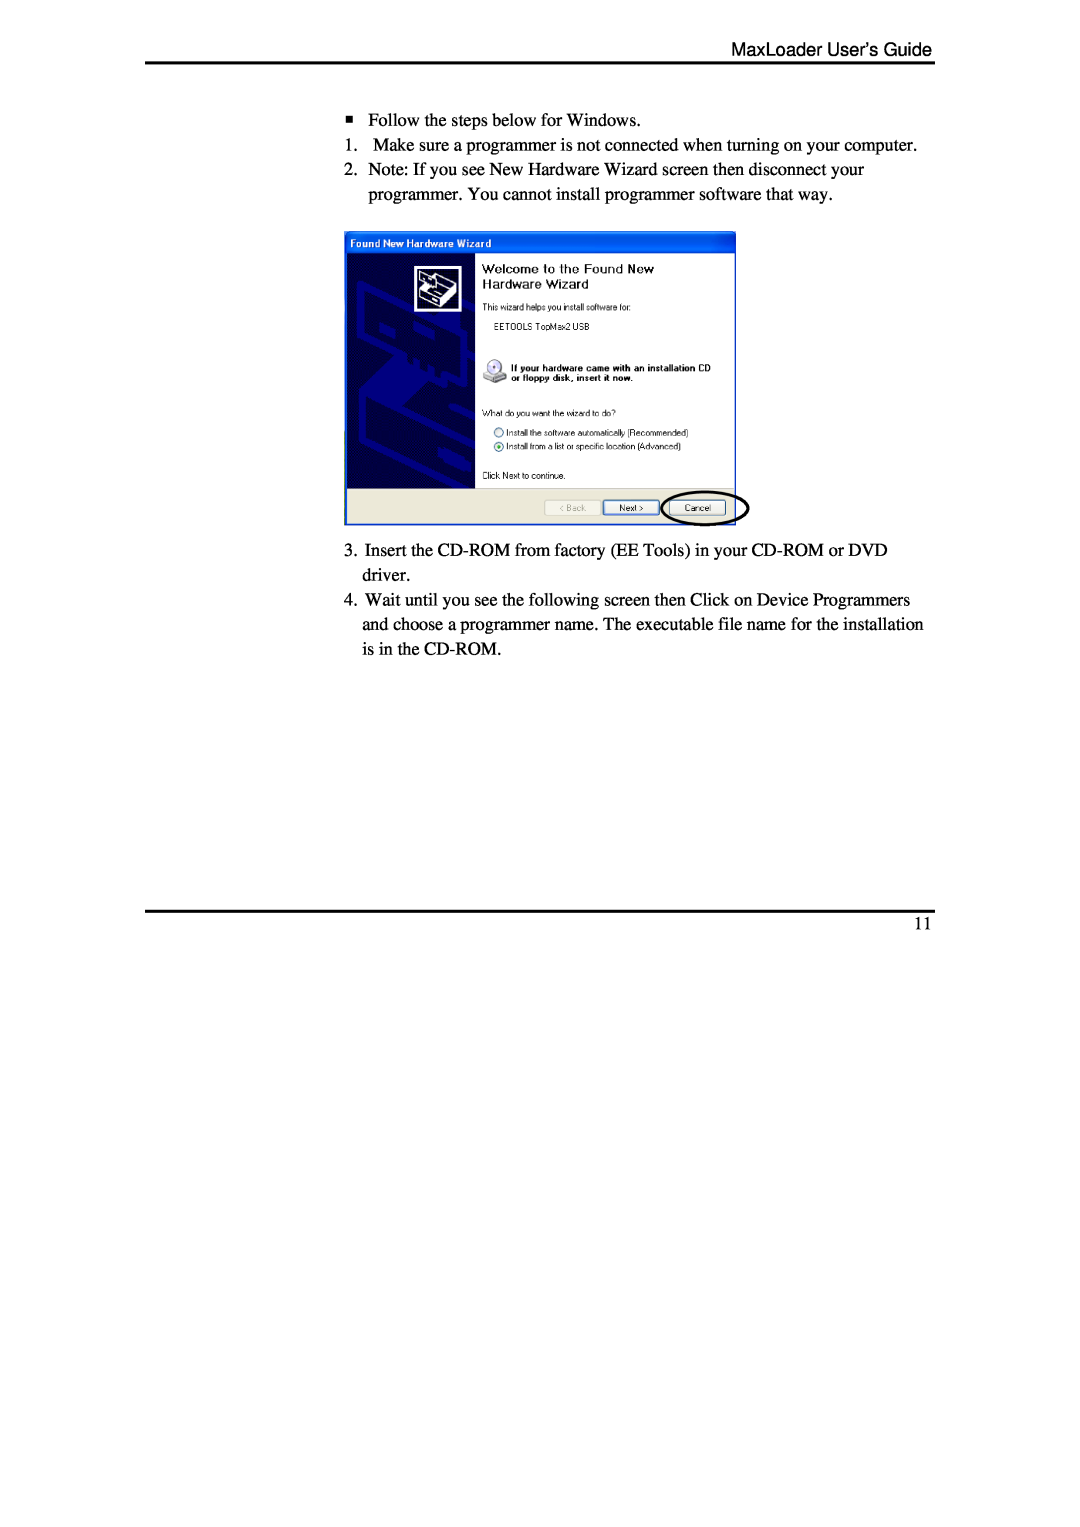 IBM MaxLoader manual ƒ Follow the steps below for Windows 